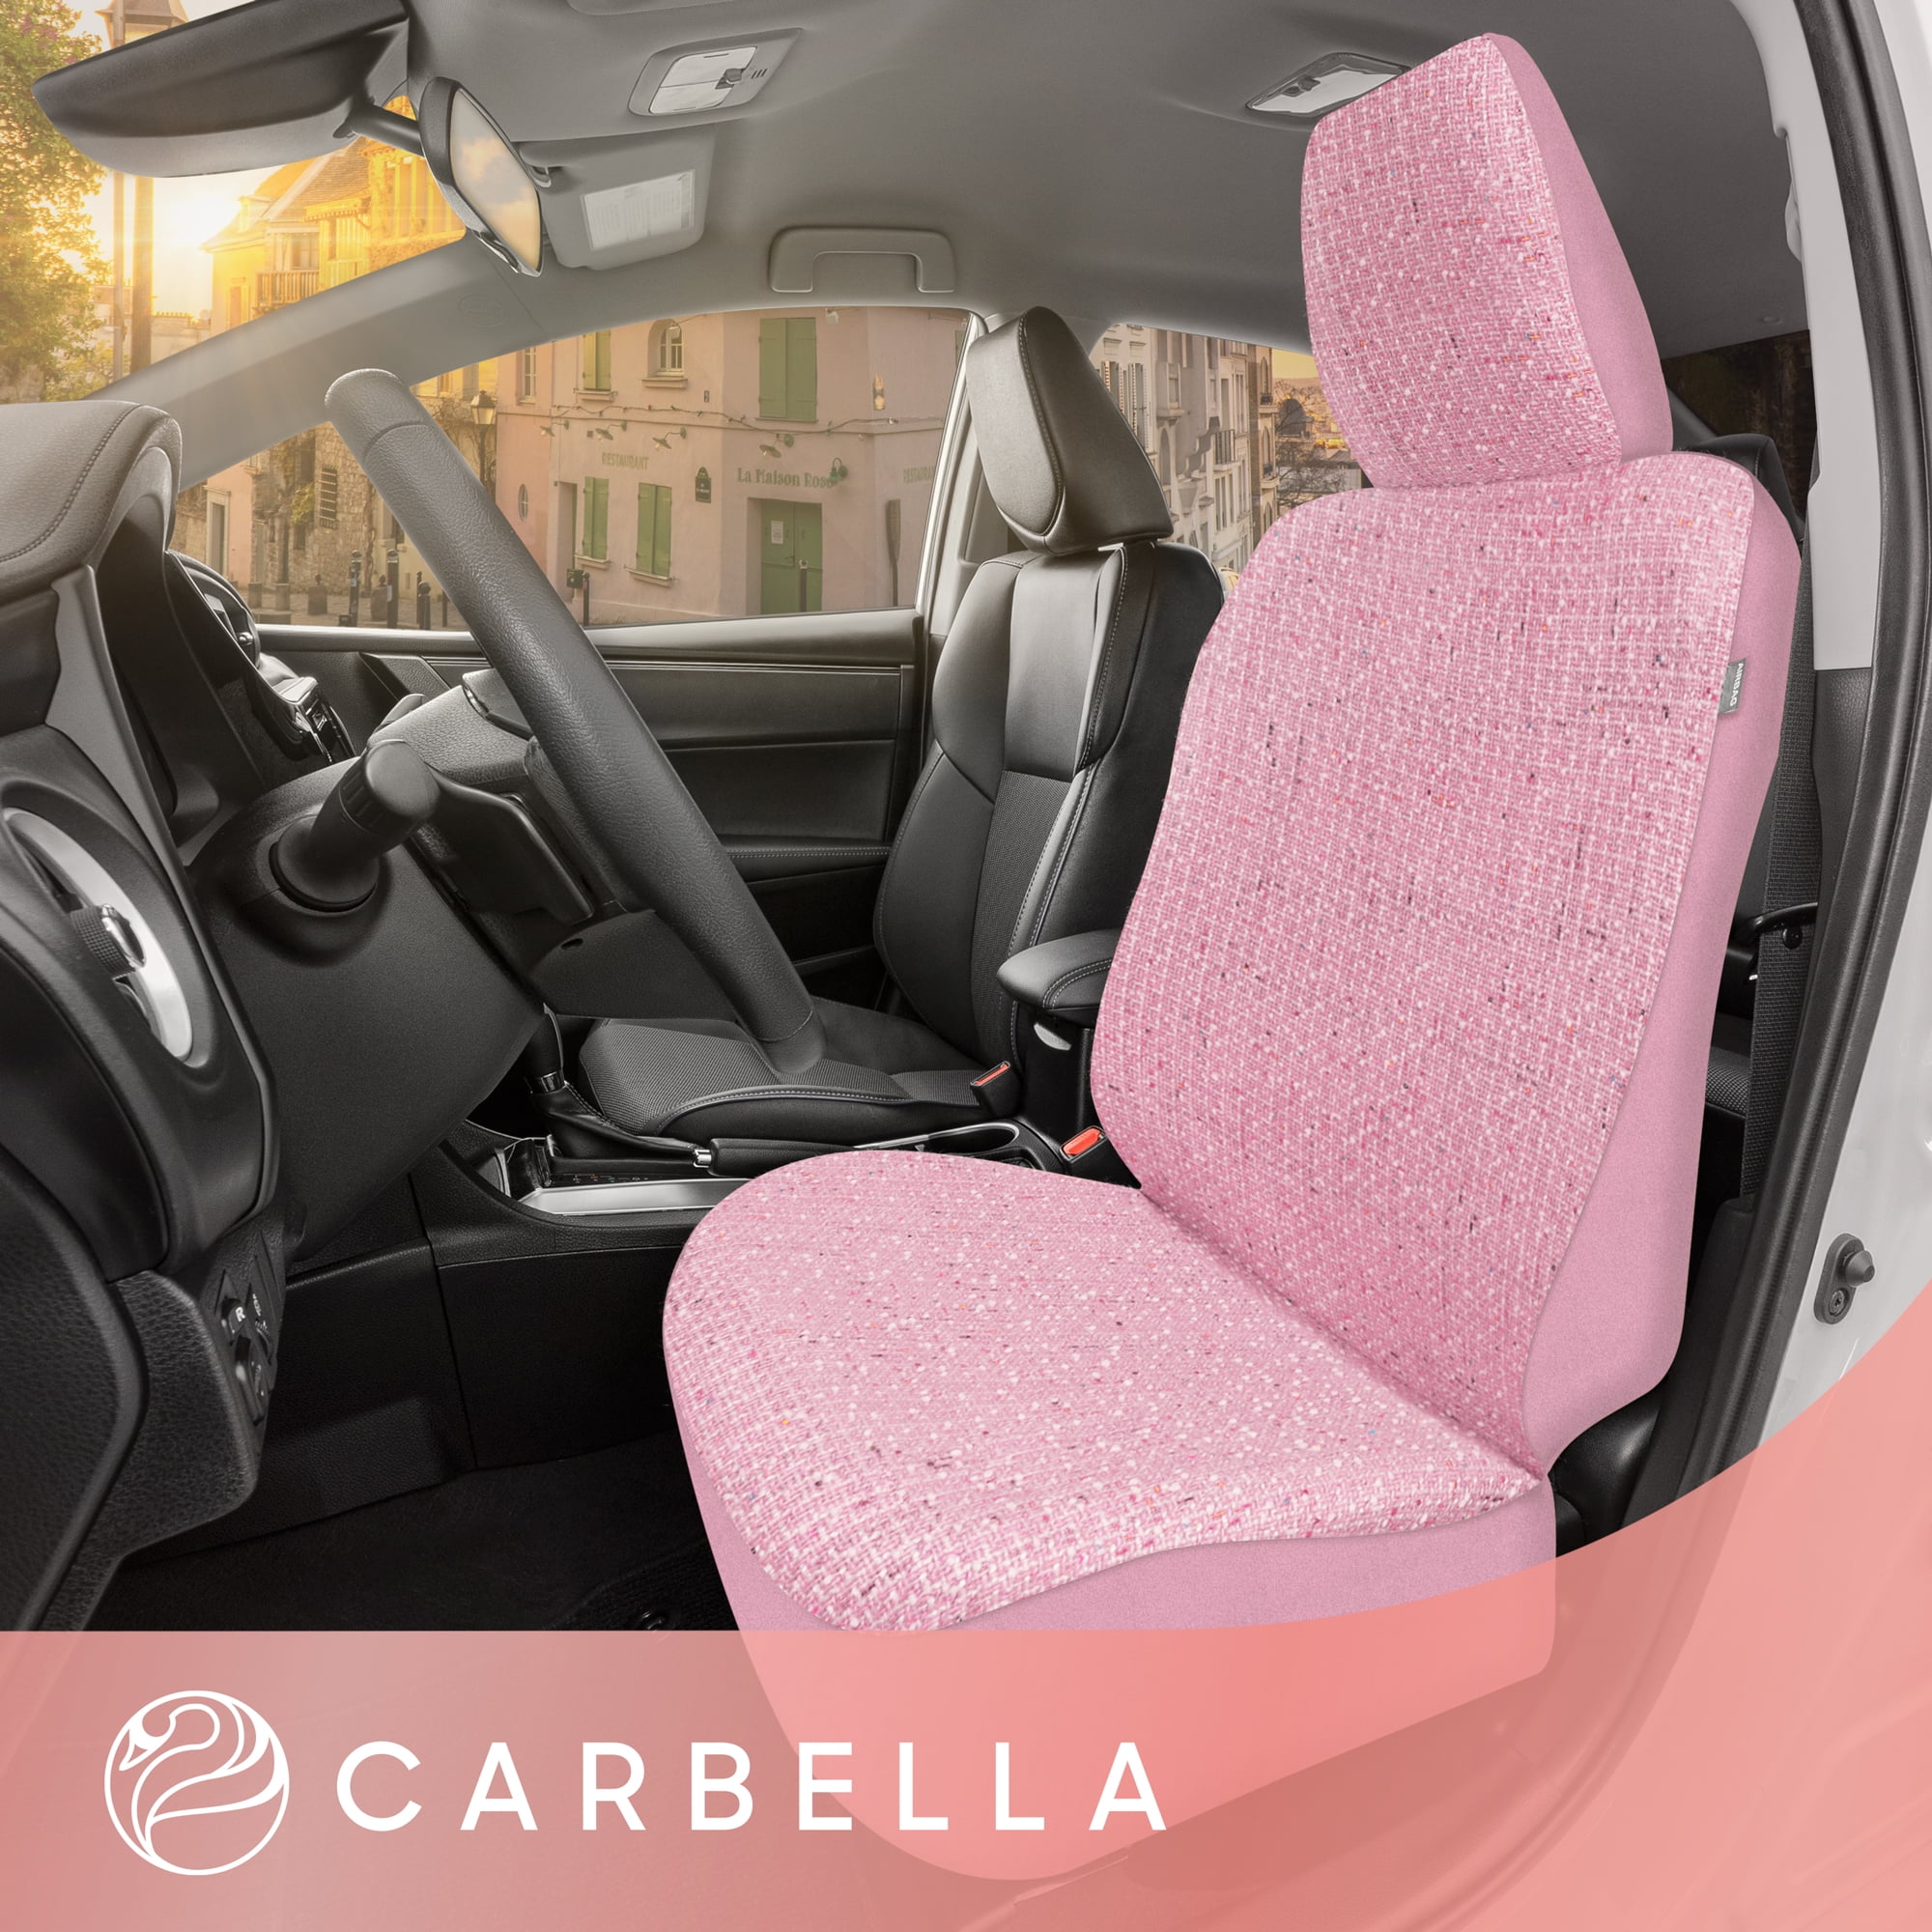 Pink car seat covers - .de